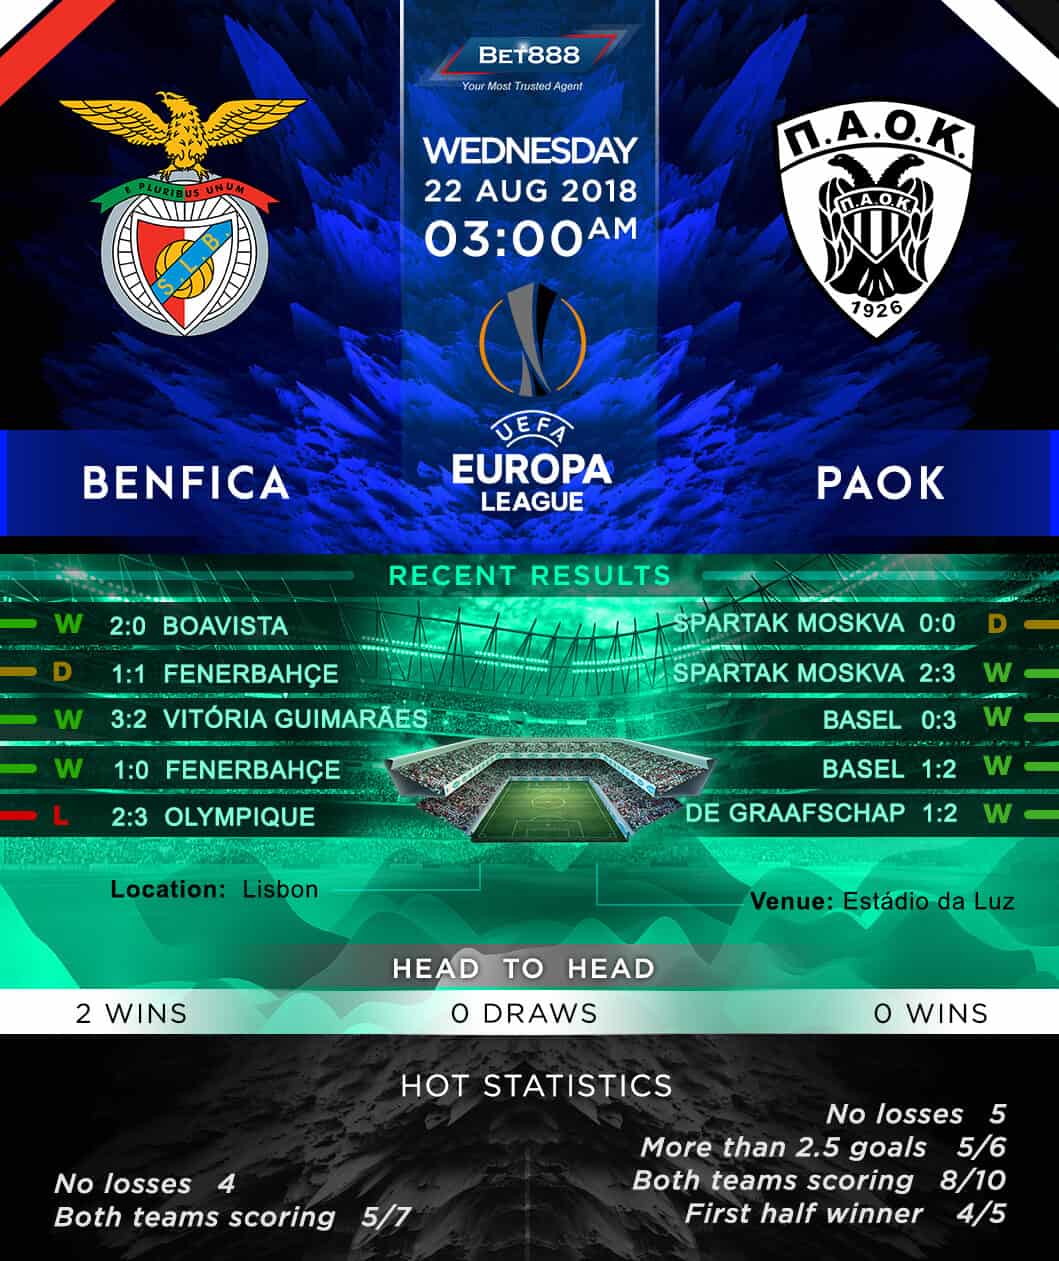 Benfica vs PAOK 22/08/18